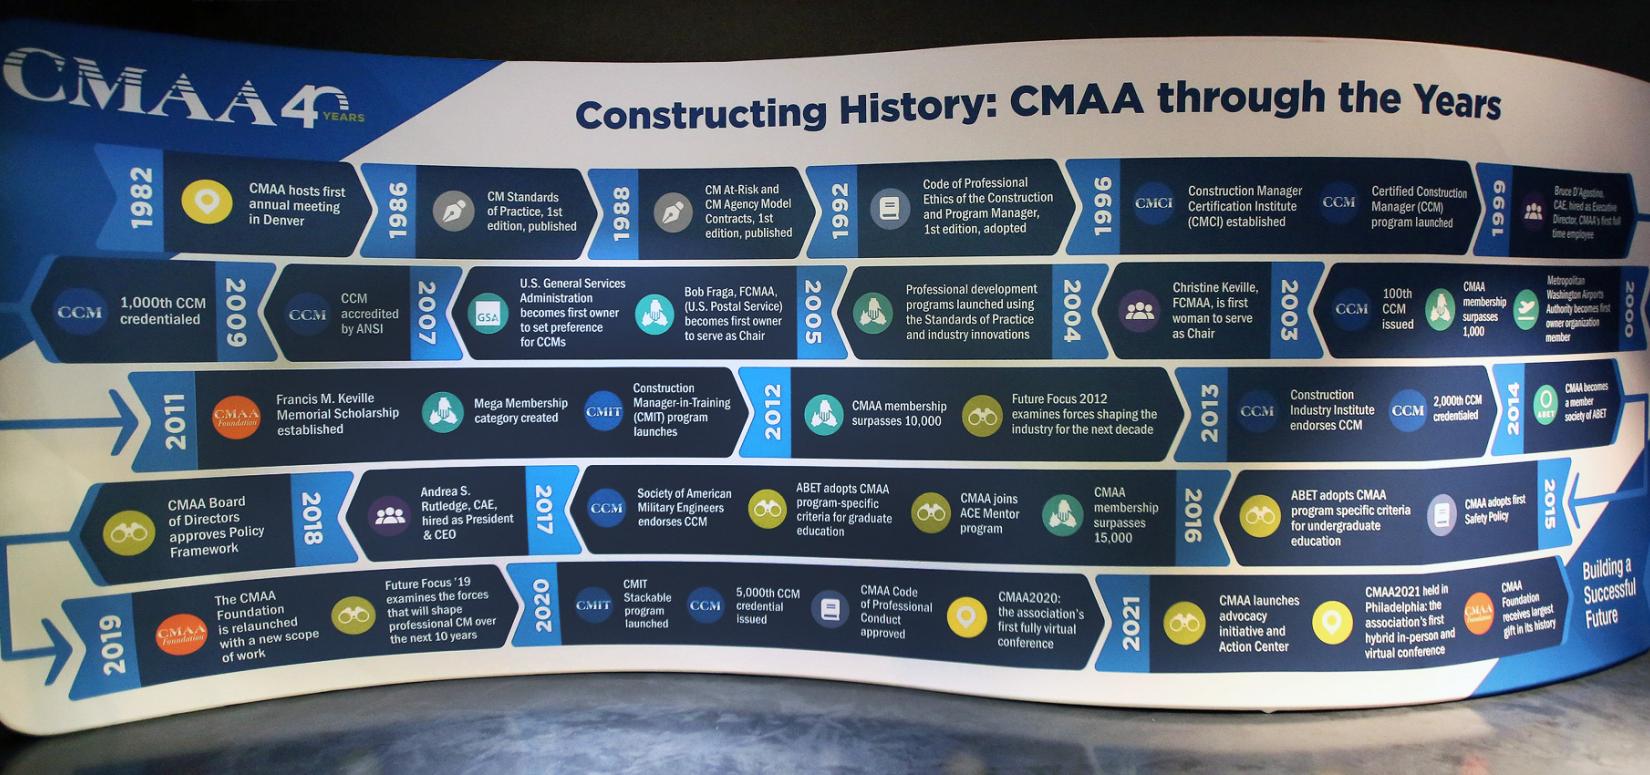 CMAA 40 Years History Timeline